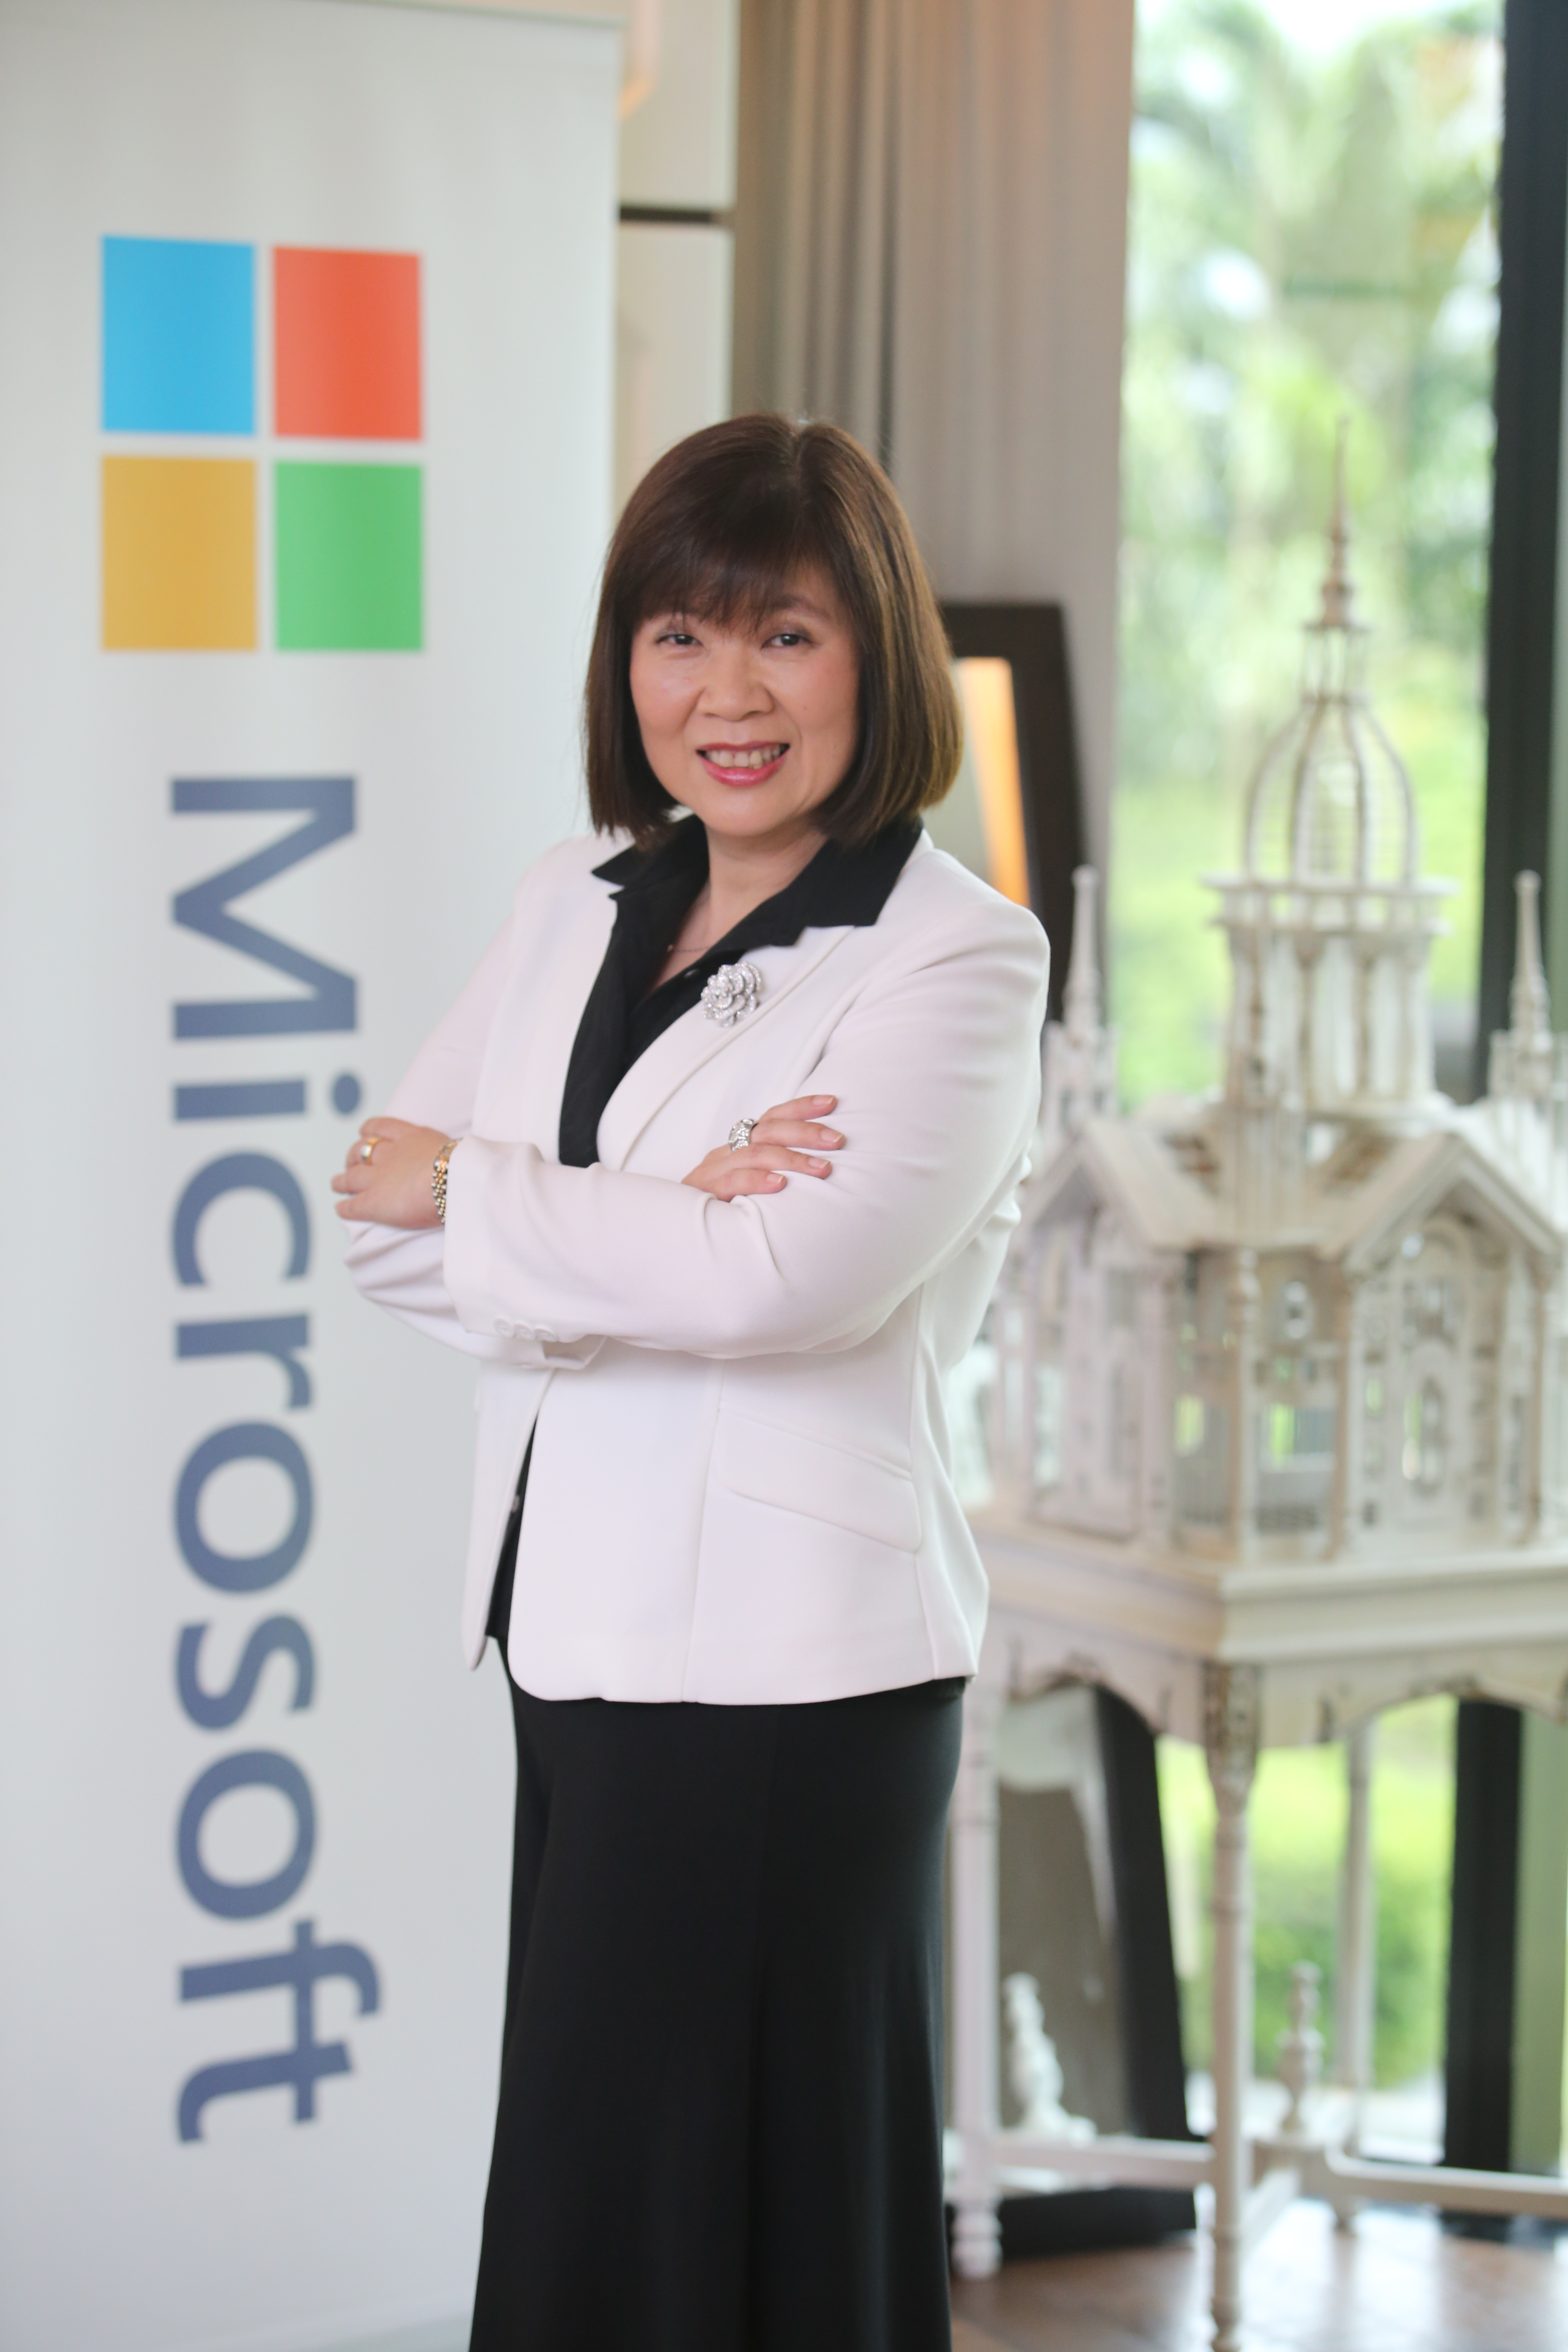 Ms. Chutima Sribumrungsart, Human Resources Director, Microsoft Thailand